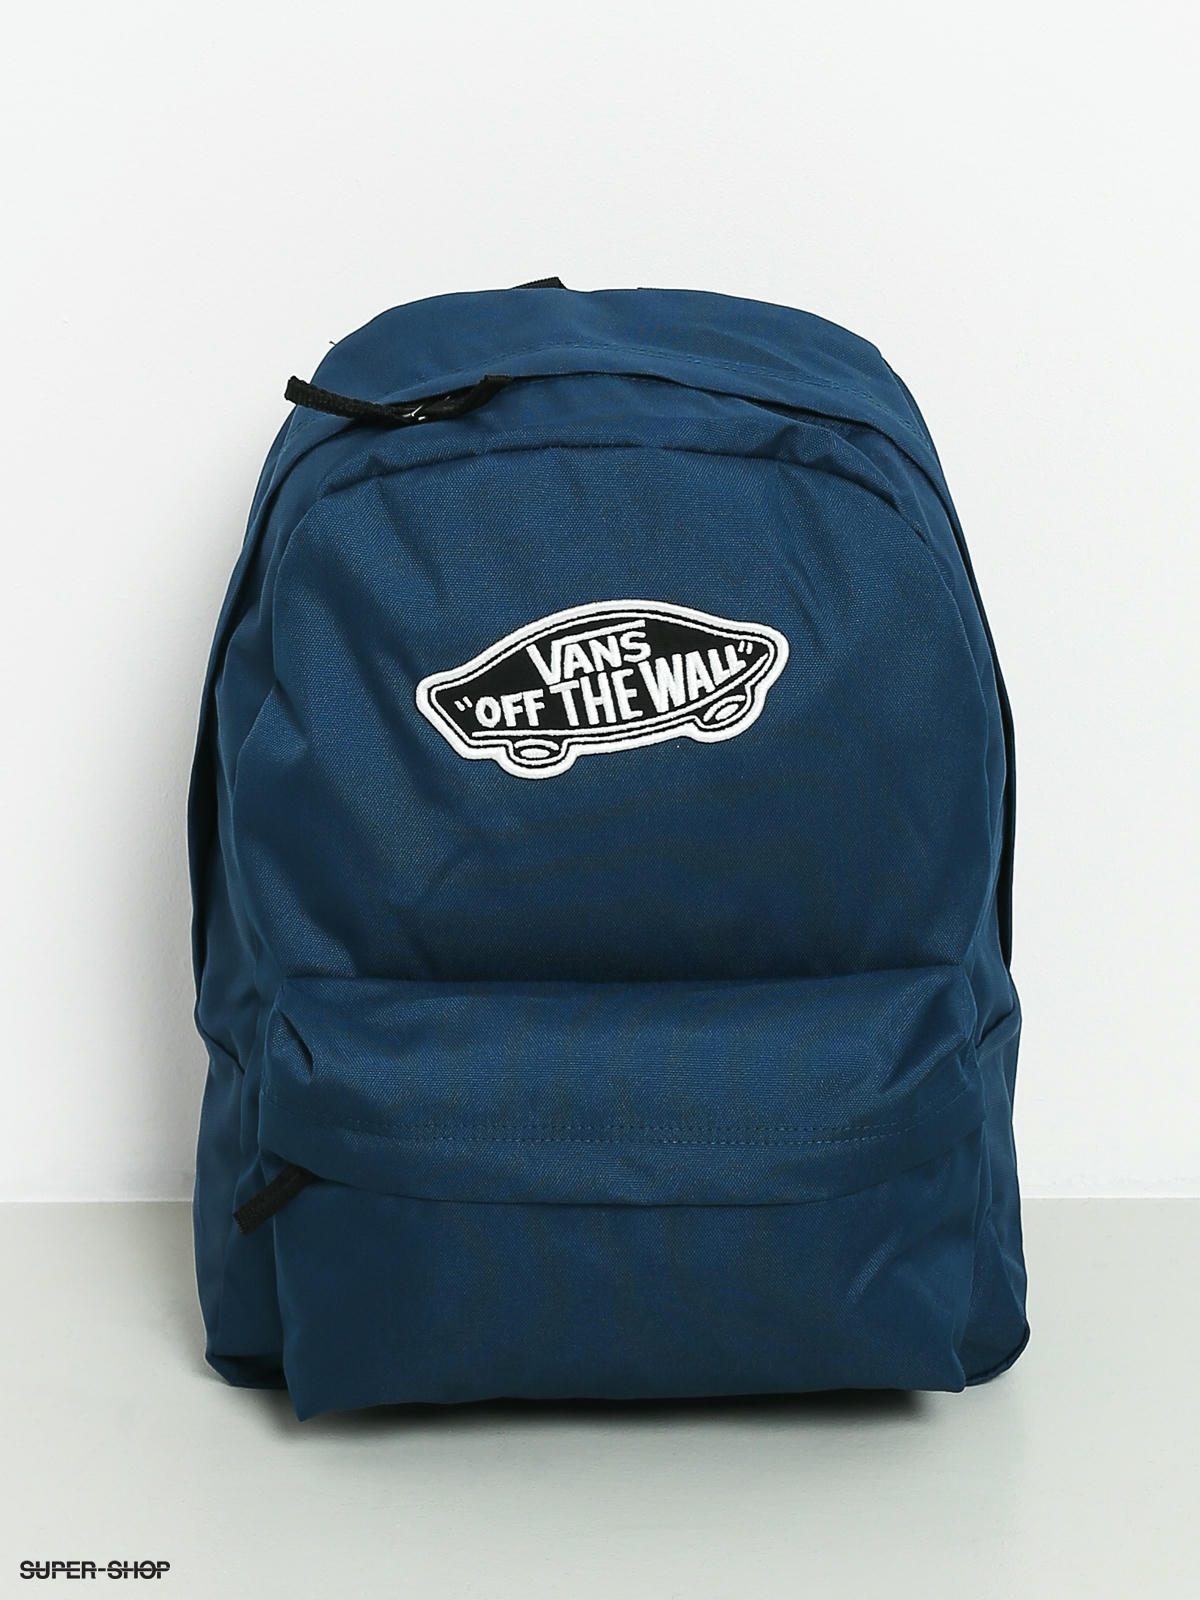 navy blue vans backpack